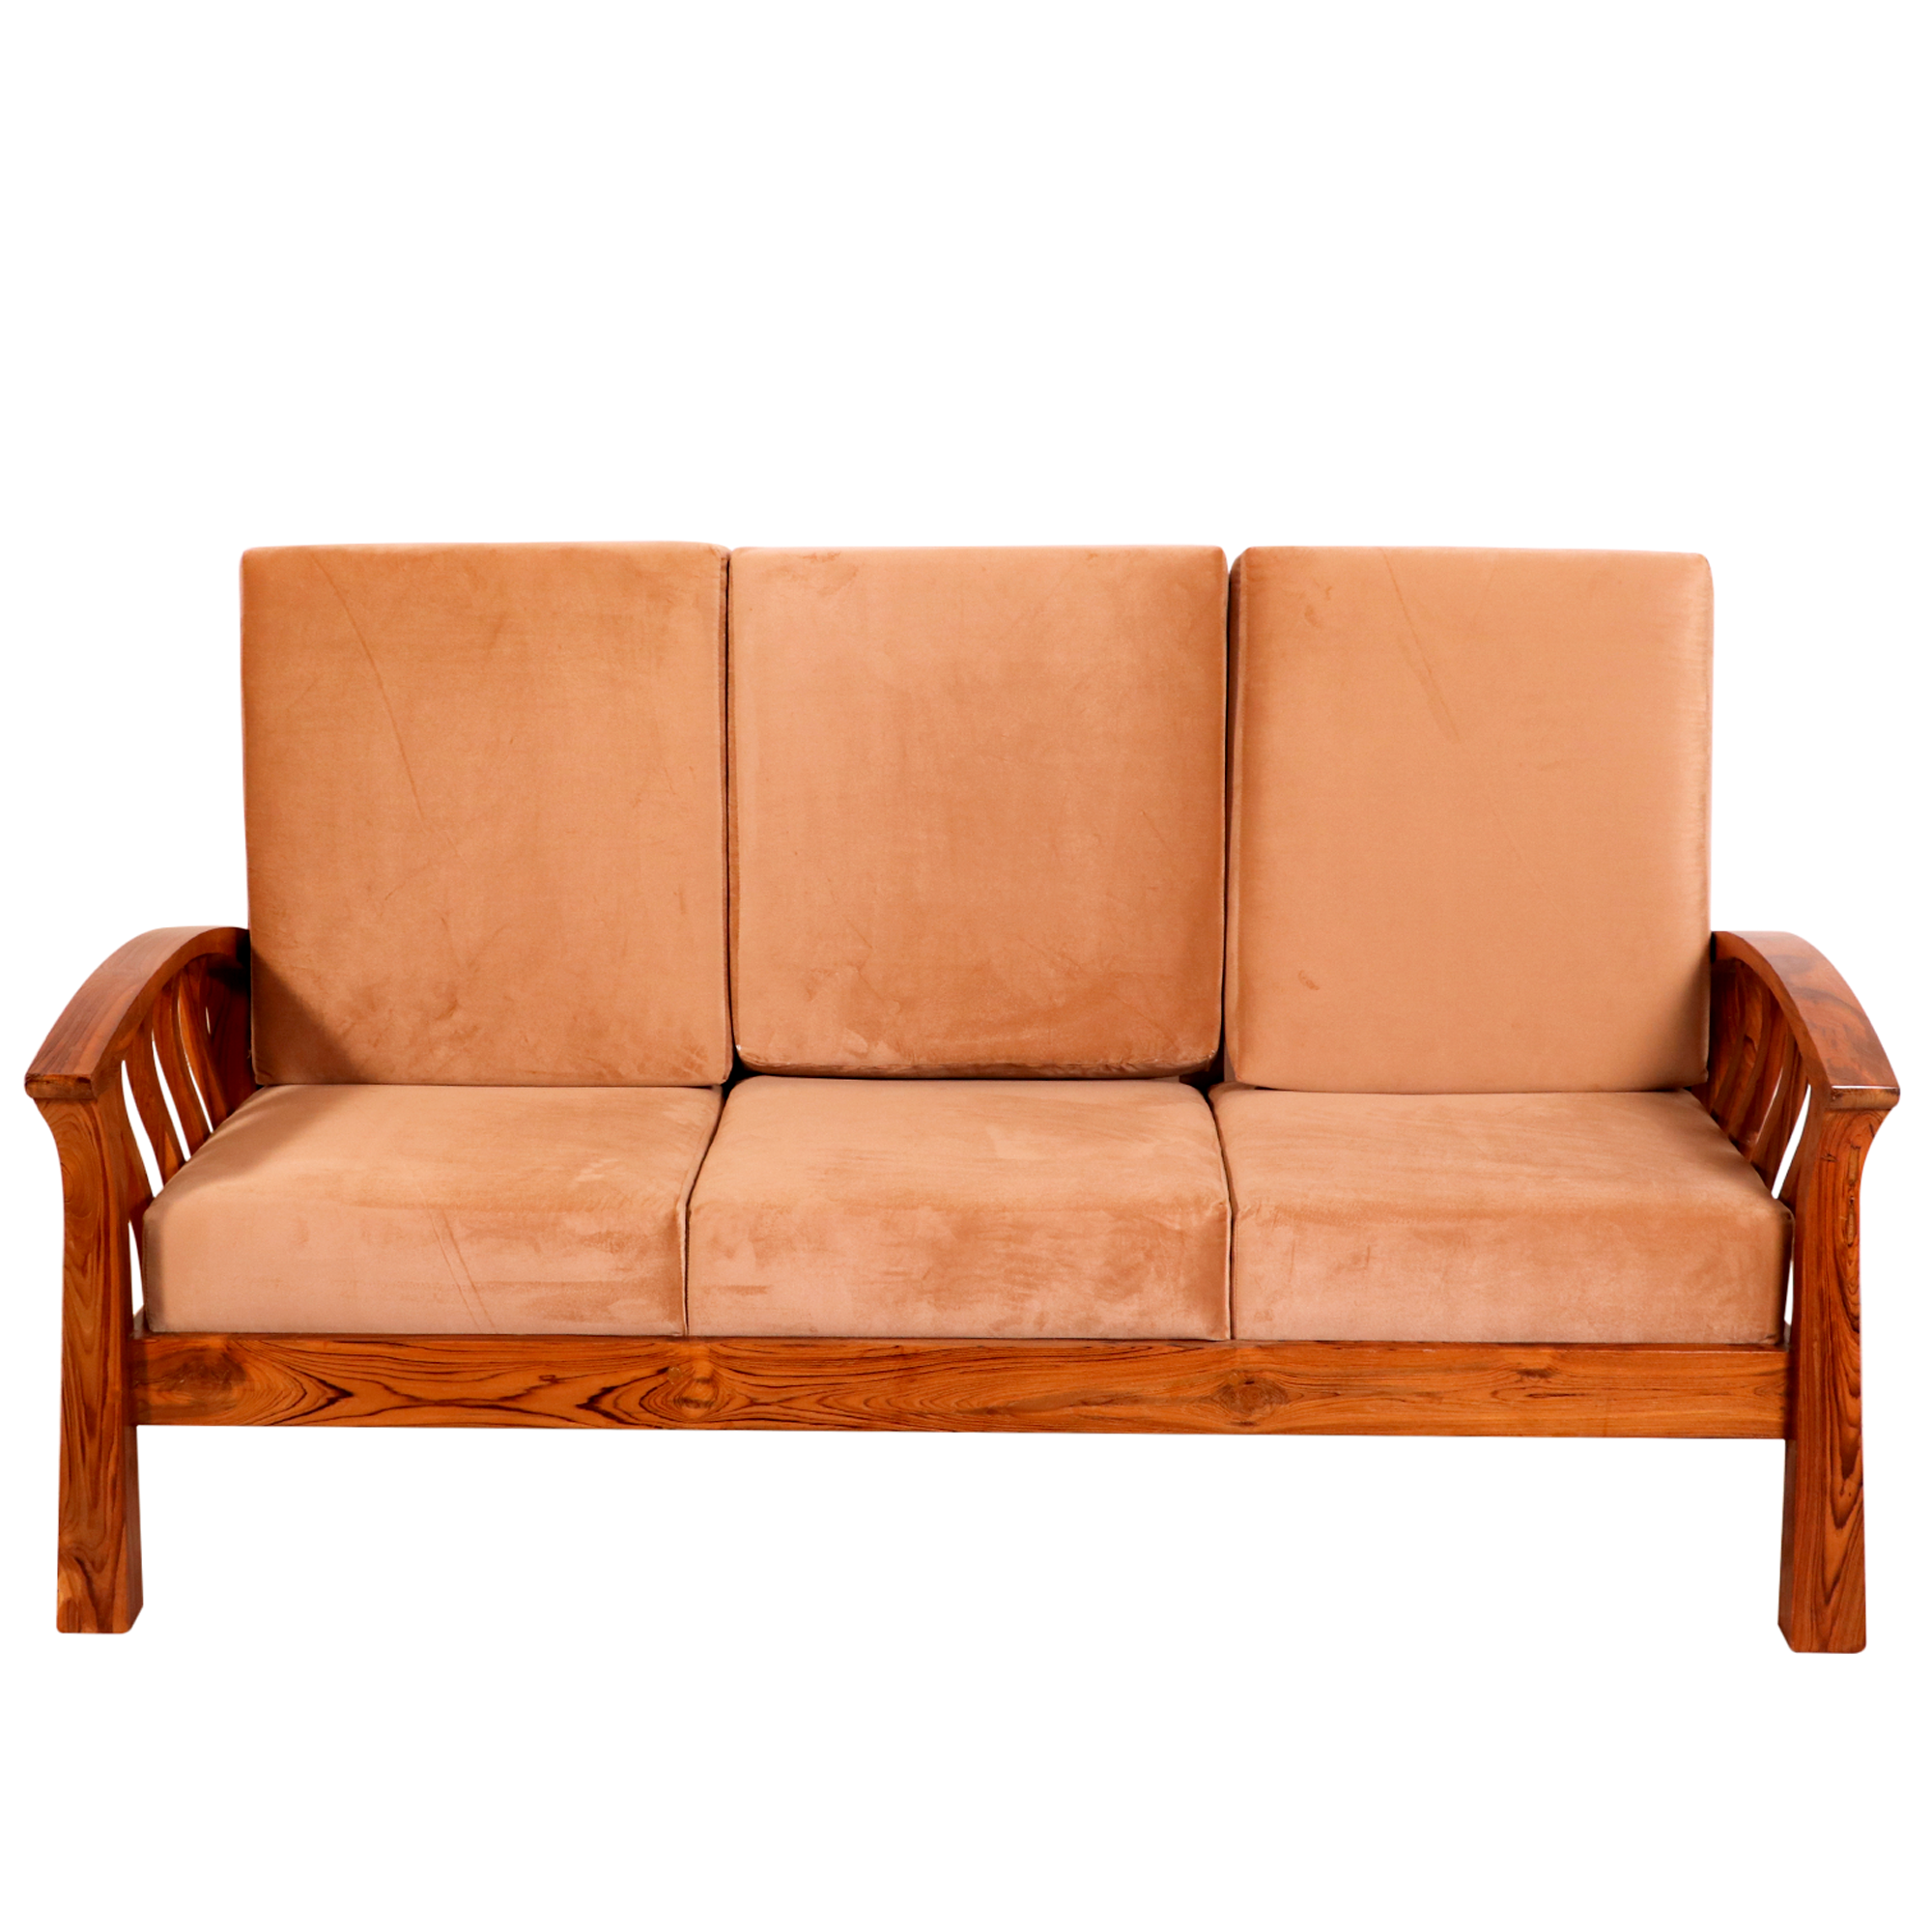 Teak wood curved strip design 3 Seater Sofa Sofa